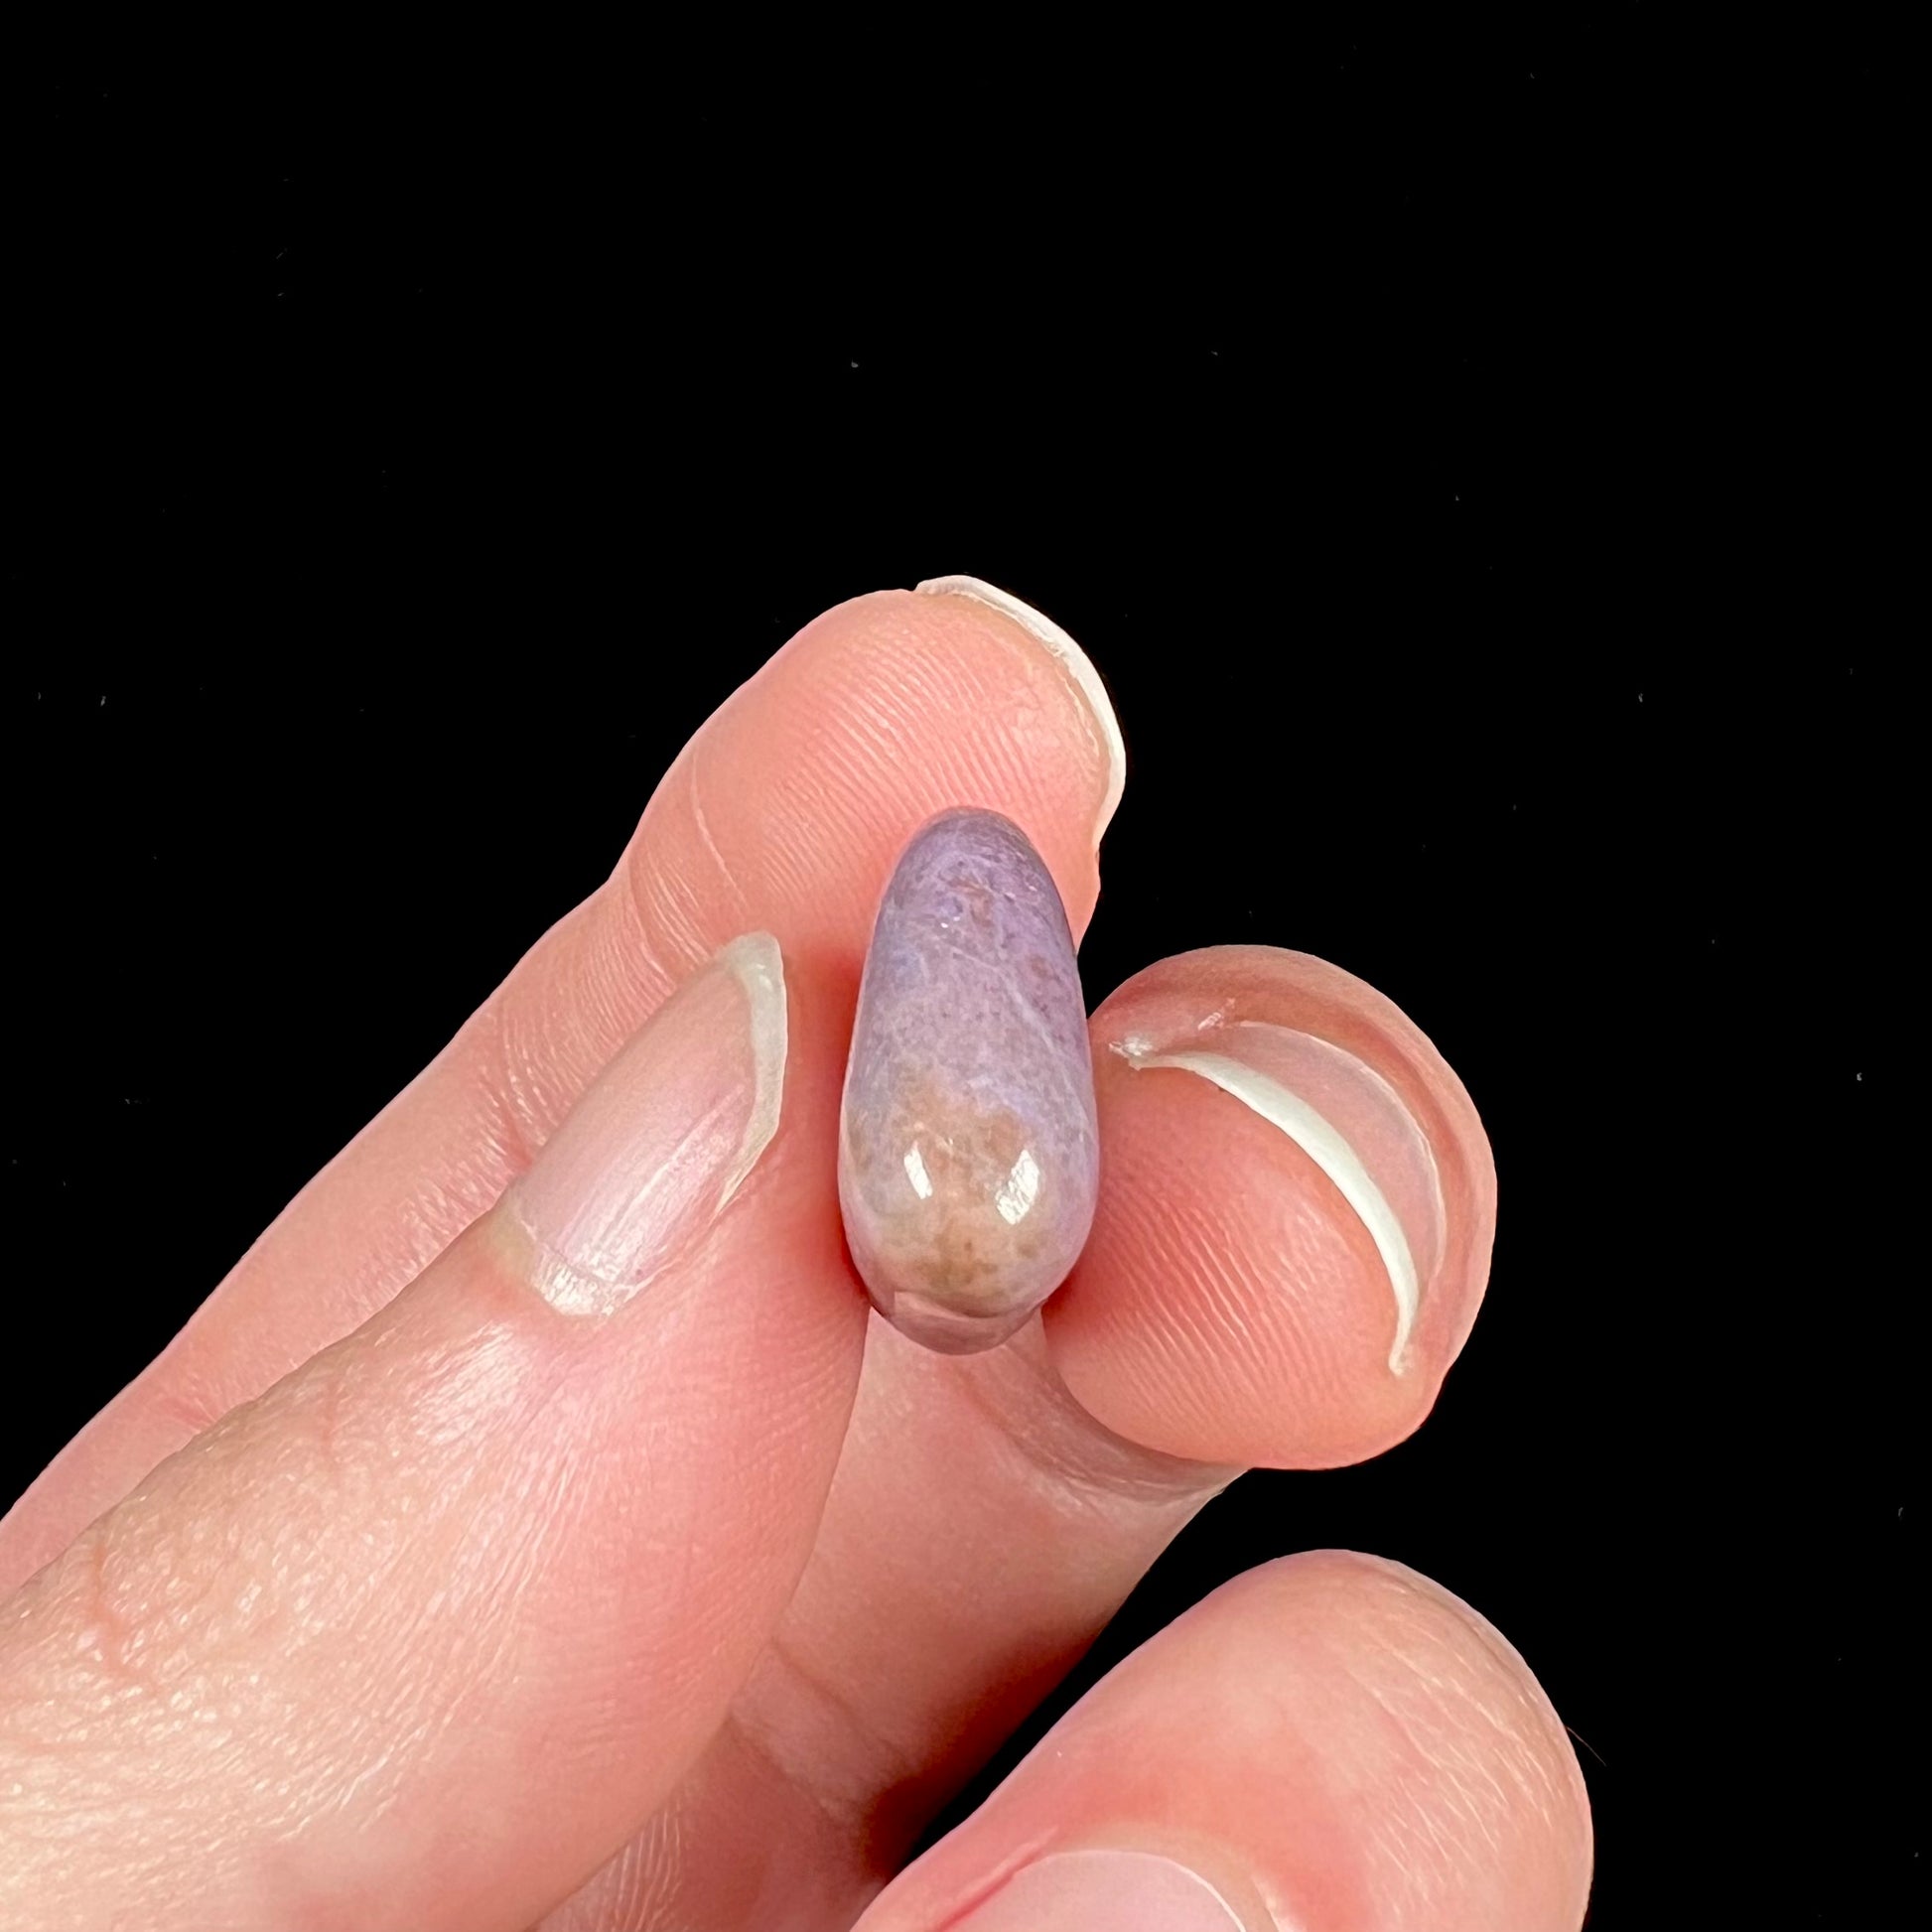 A tumble polished purple turkiyenite jade stone from Bursa, Turkey.